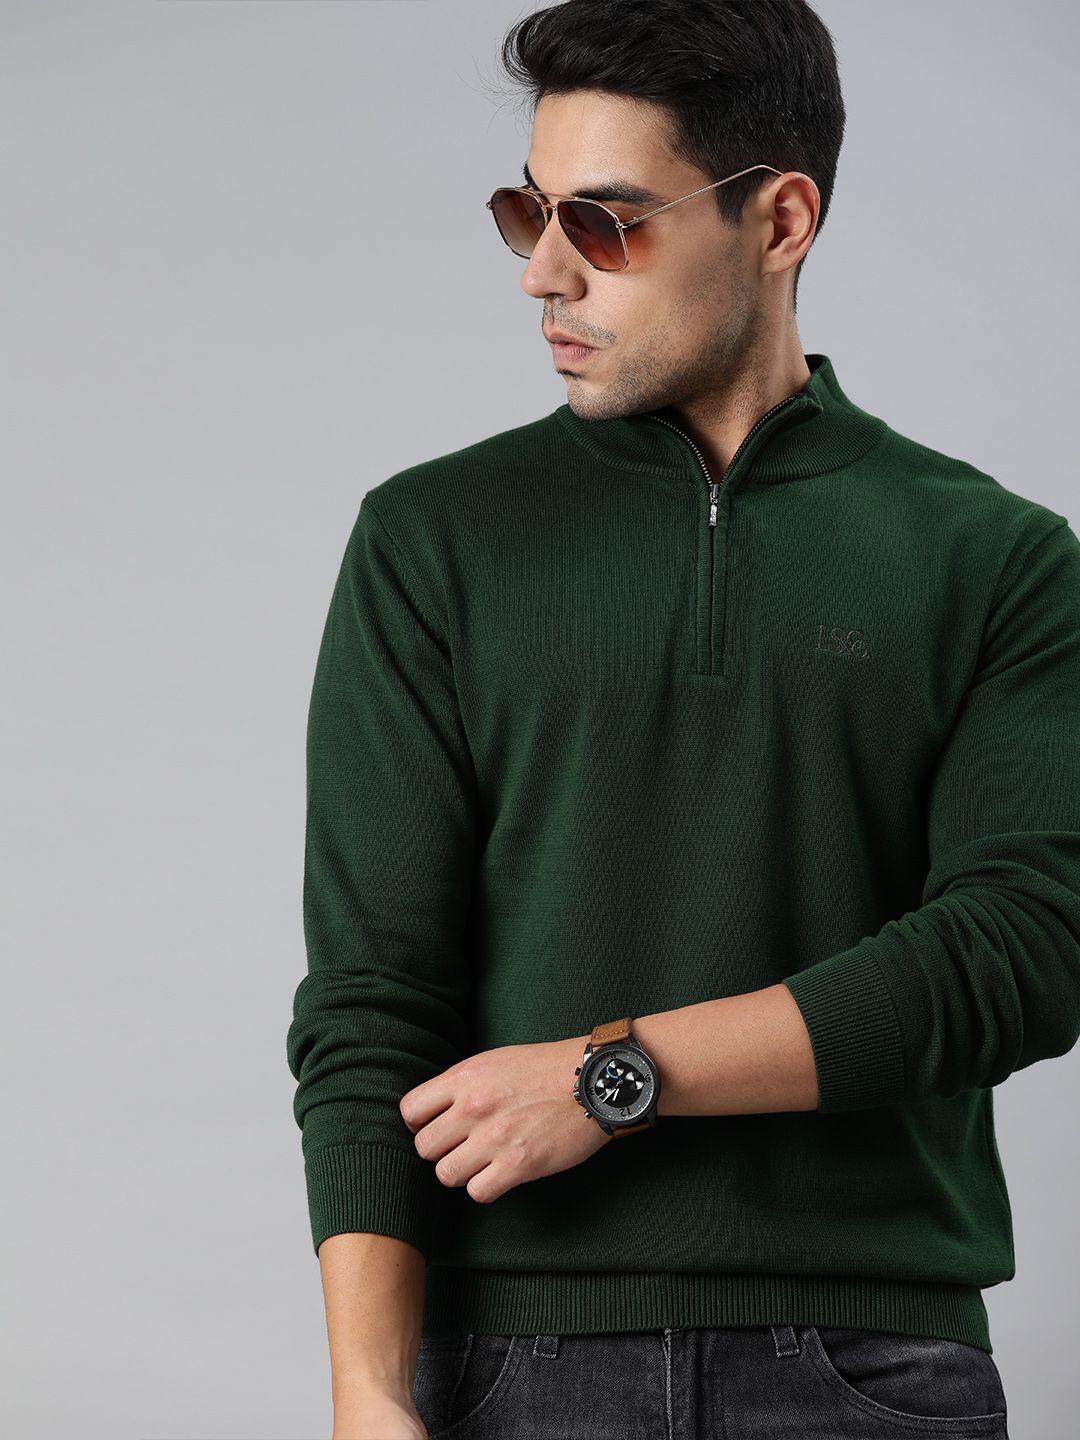 levis-men-green-solid-mock-neck-pullover-sweater